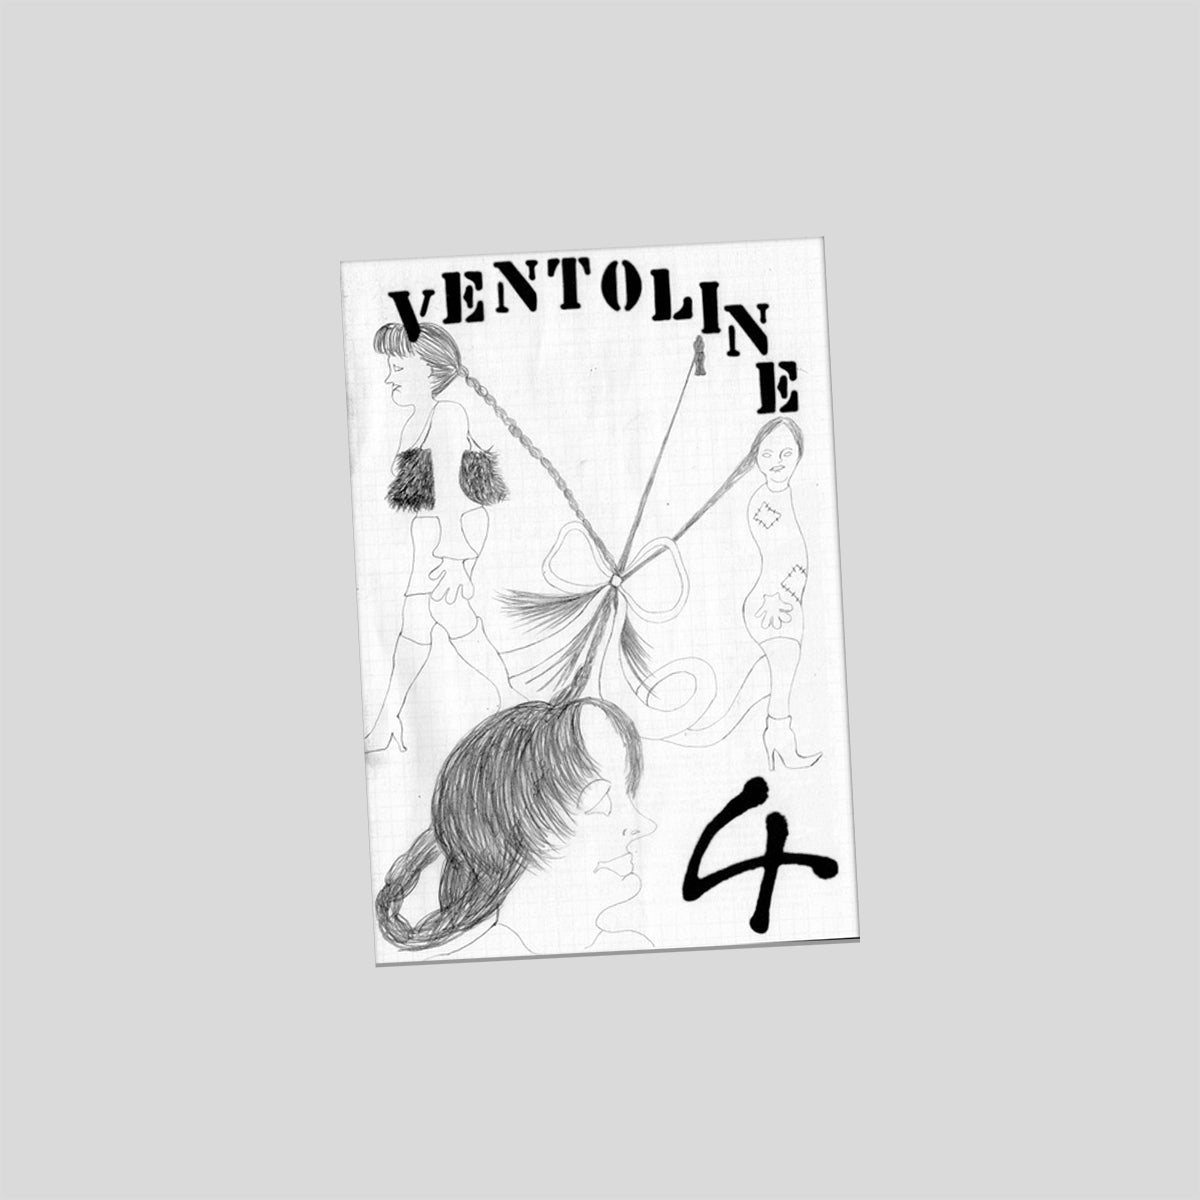 Ventoline #4